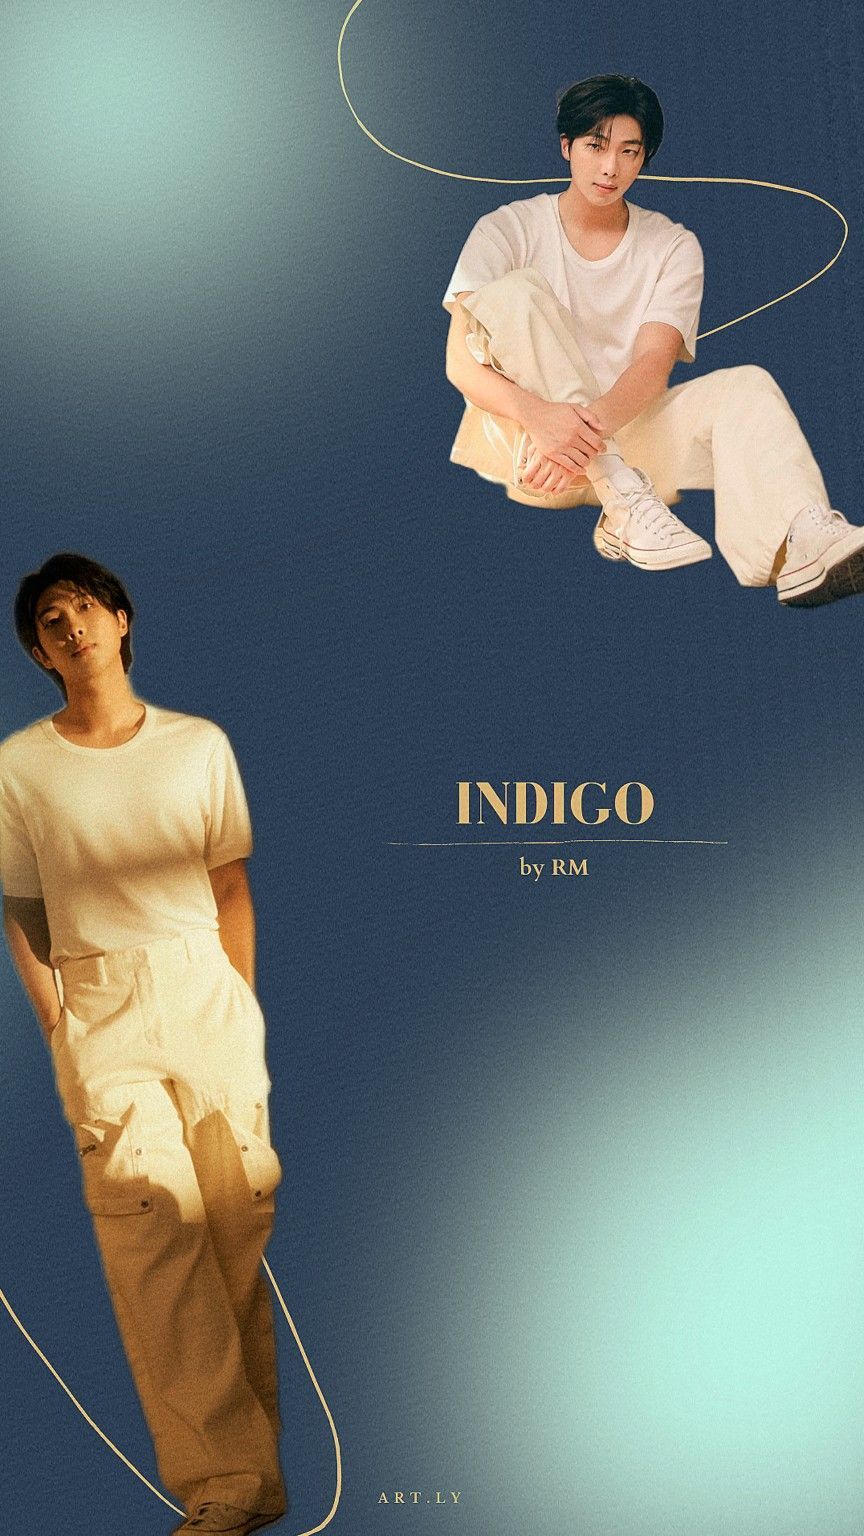 RM indigo wallpaper aesthetic. Indigo wallpaper, Indigo, Music artists